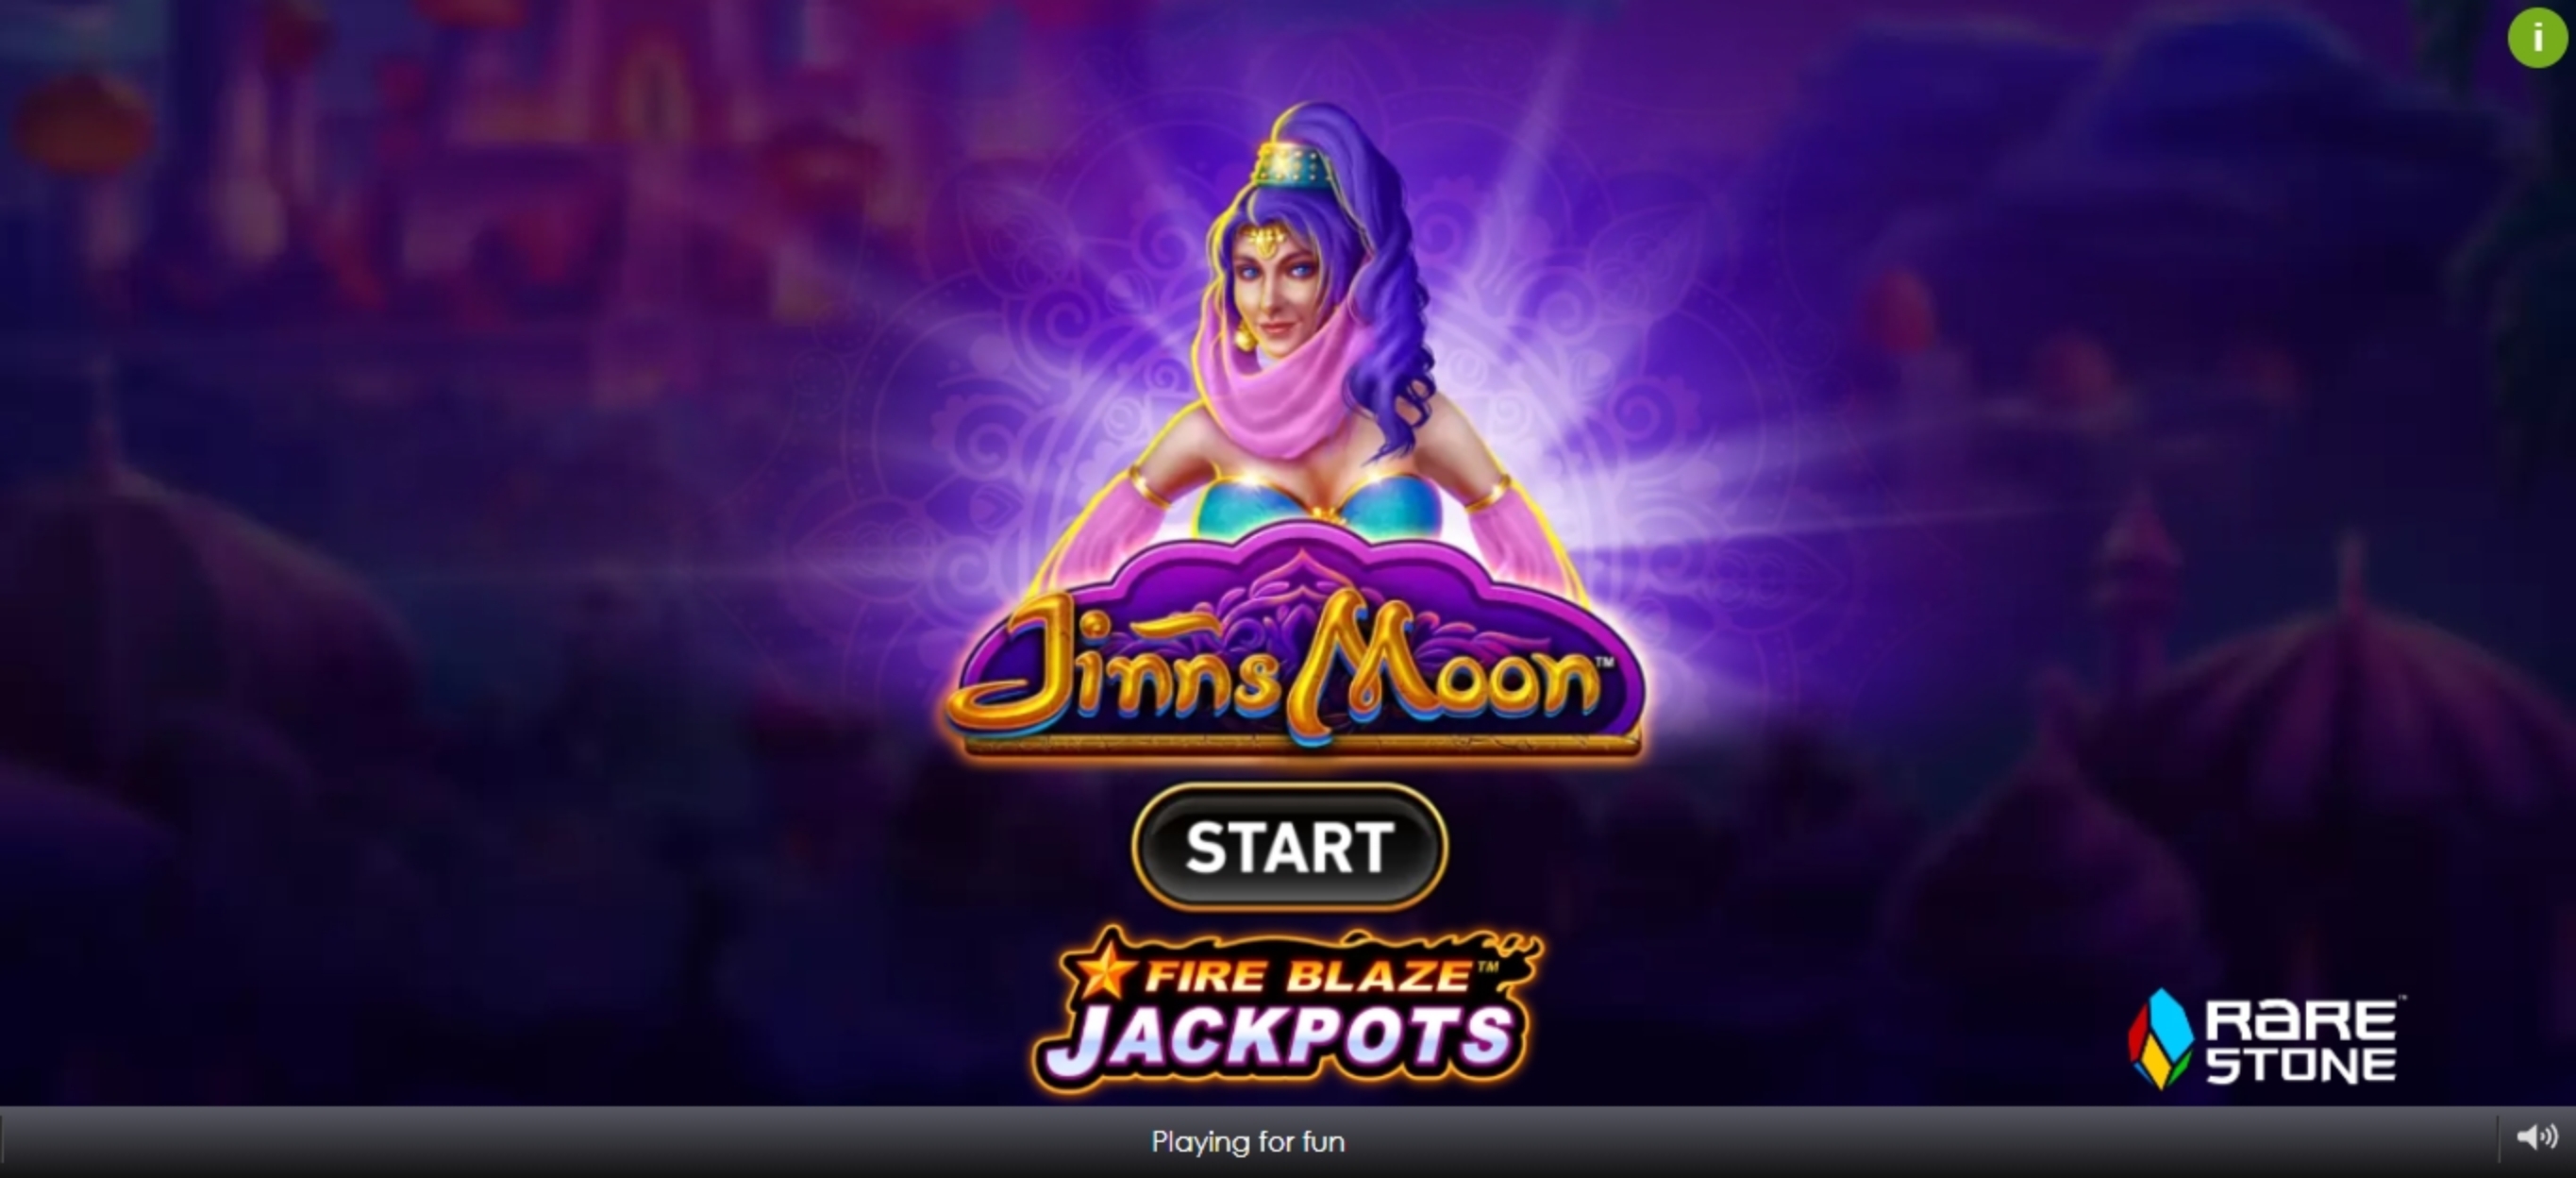 Play Jinns Moon Free Casino Slot Game by Rarestone Gaming